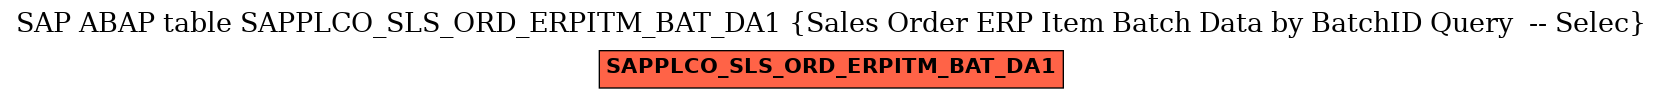 E-R Diagram for table SAPPLCO_SLS_ORD_ERPITM_BAT_DA1 (Sales Order ERP Item Batch Data by BatchID Query  -- Selec)